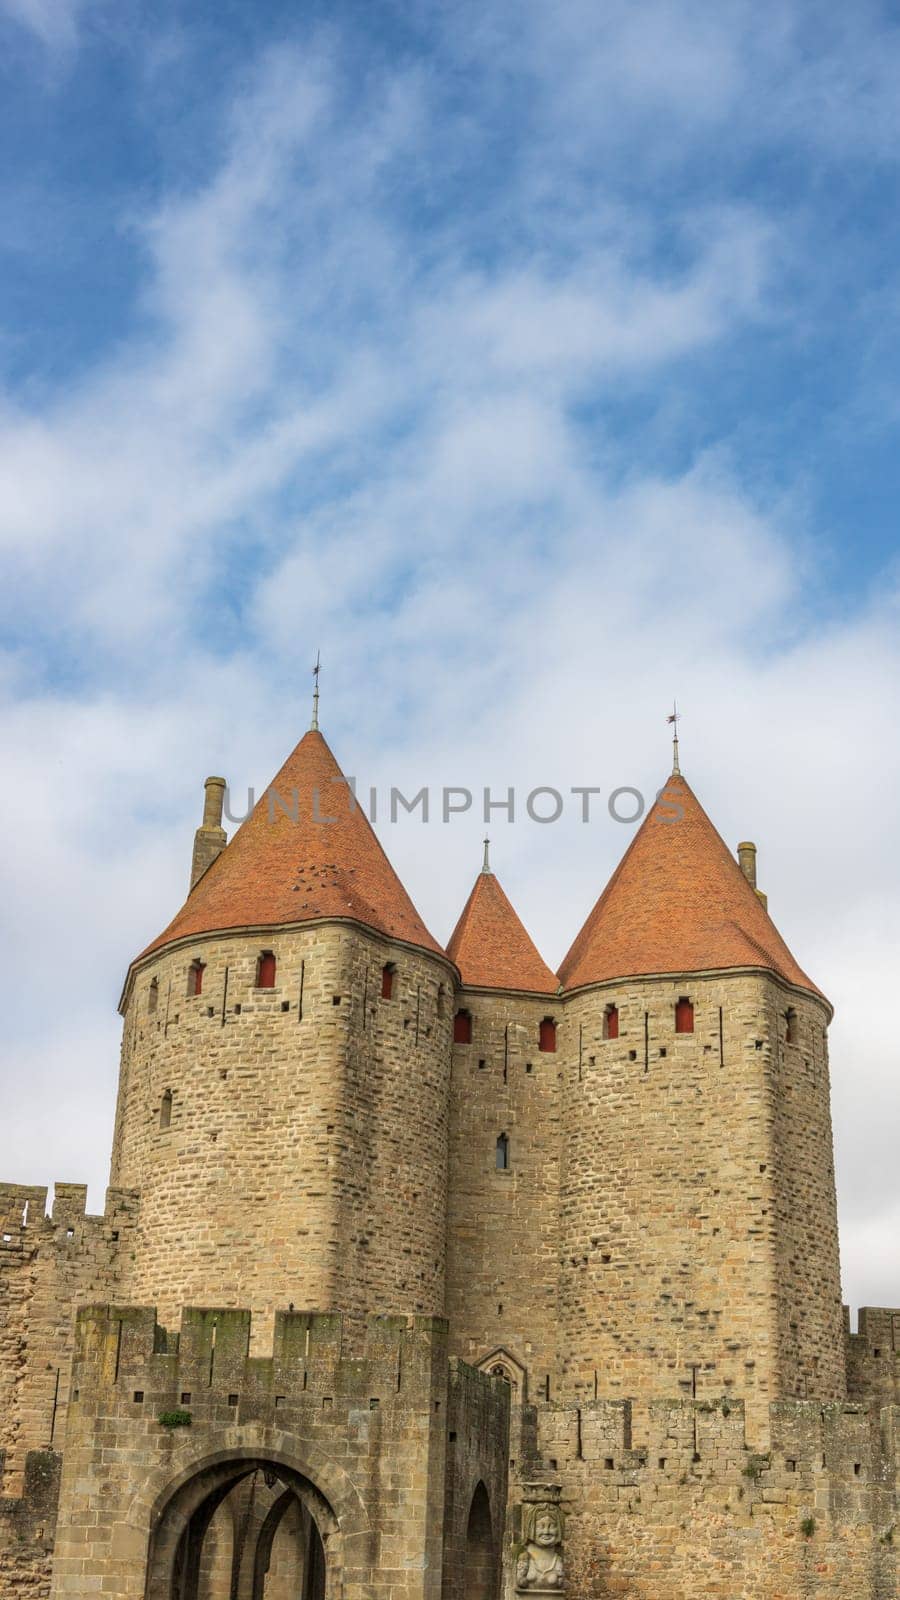 Castle of Carcassonne in France. Impressive medieval fortress